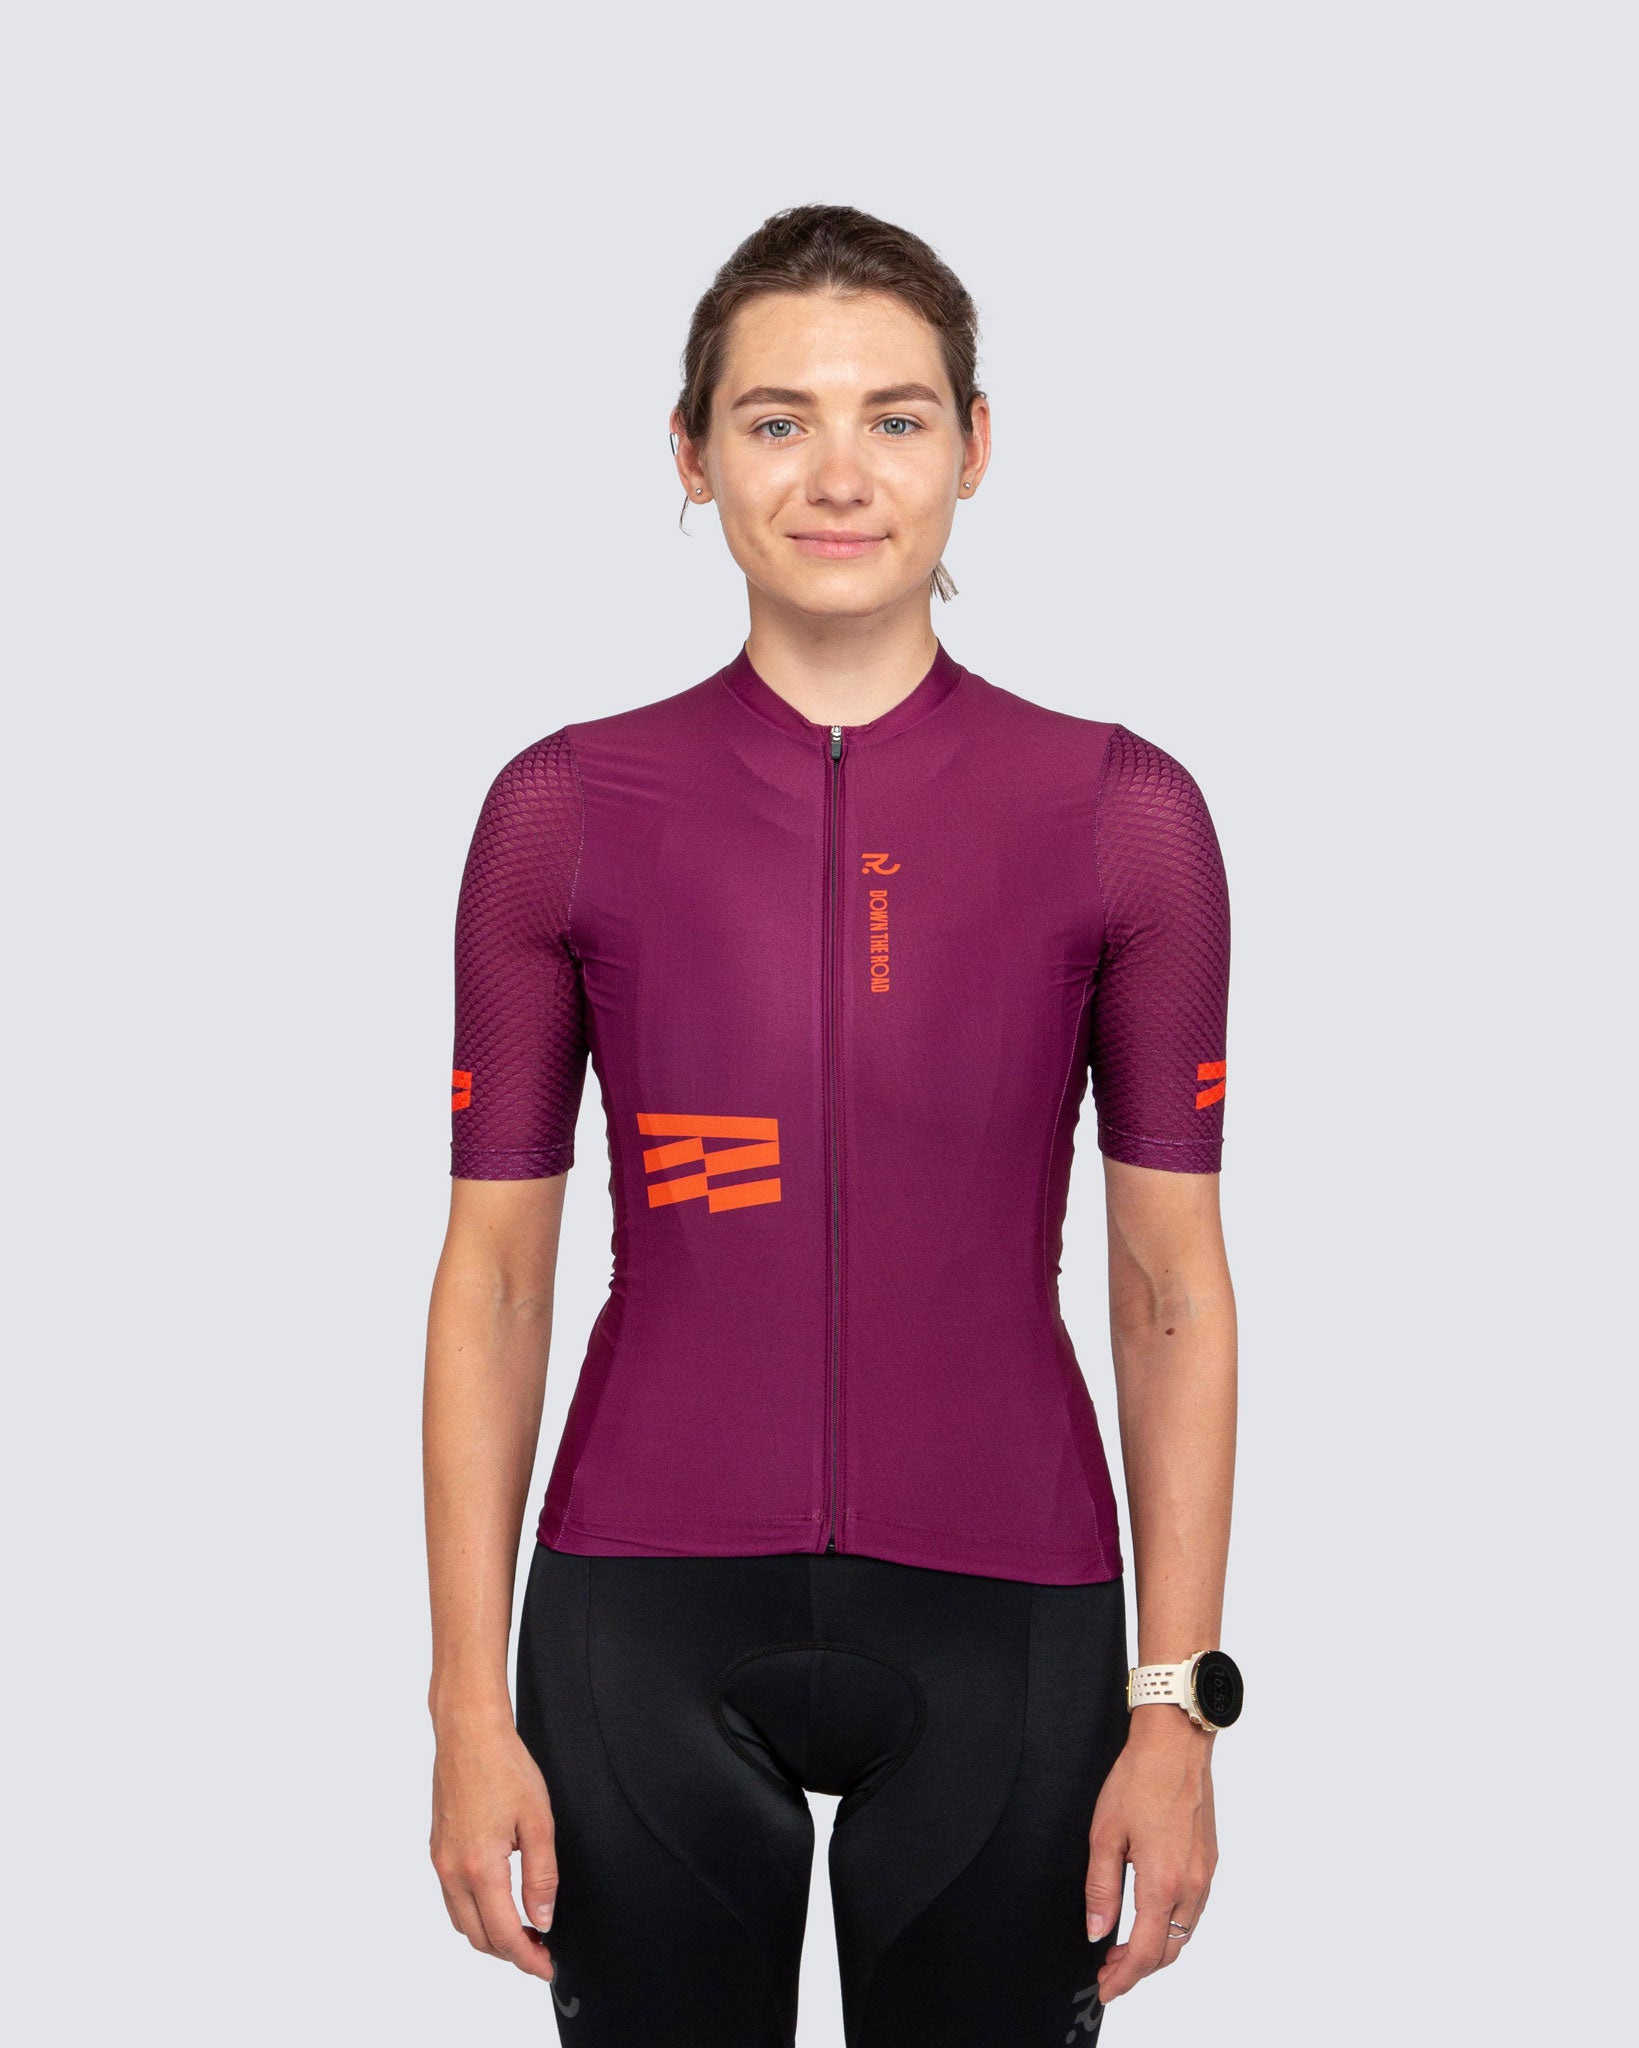 woman wearing Plum & Orange century cycling jersey